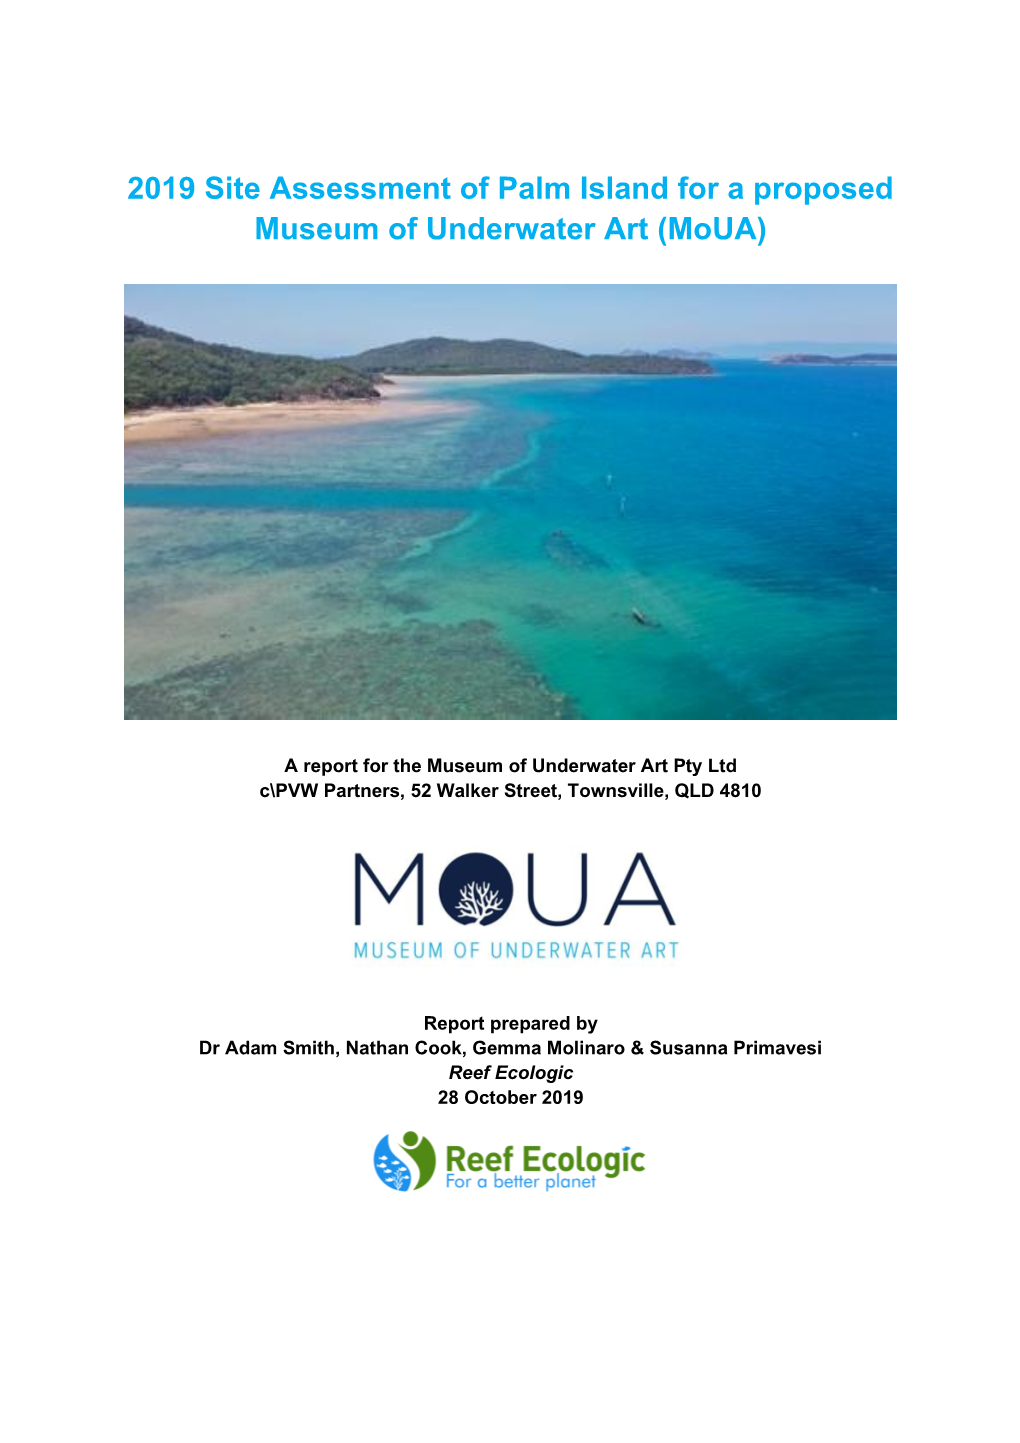 2019 MOUA Site Assessment of Palm Island